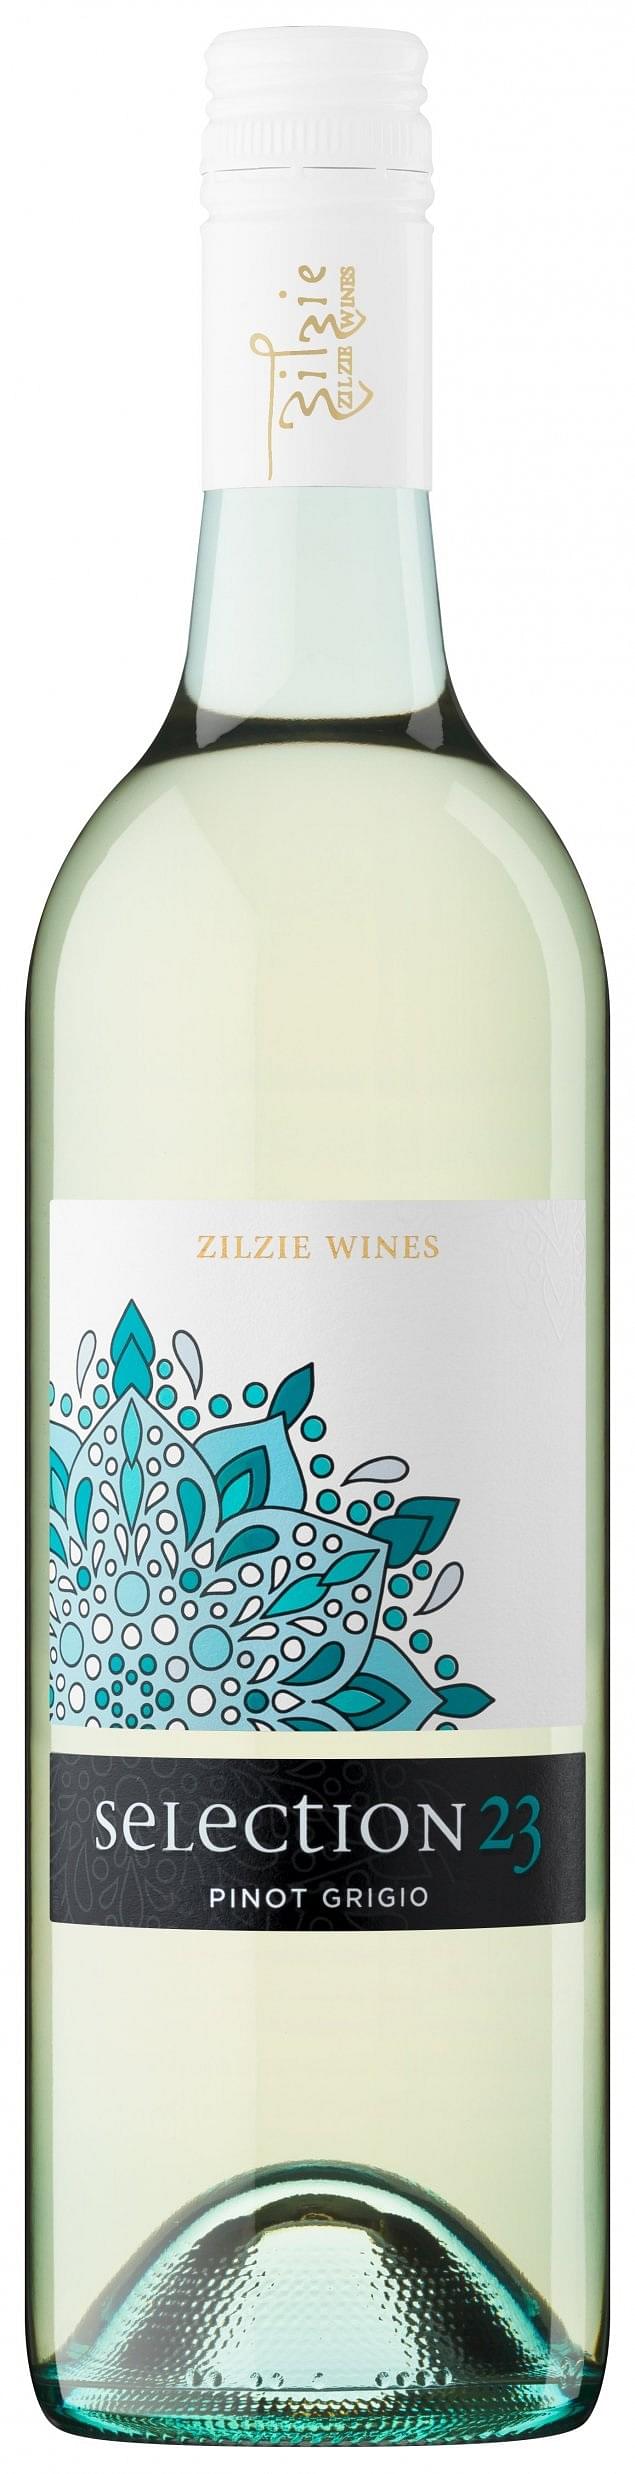 Zilzie Selection 23 Pinot Grigio